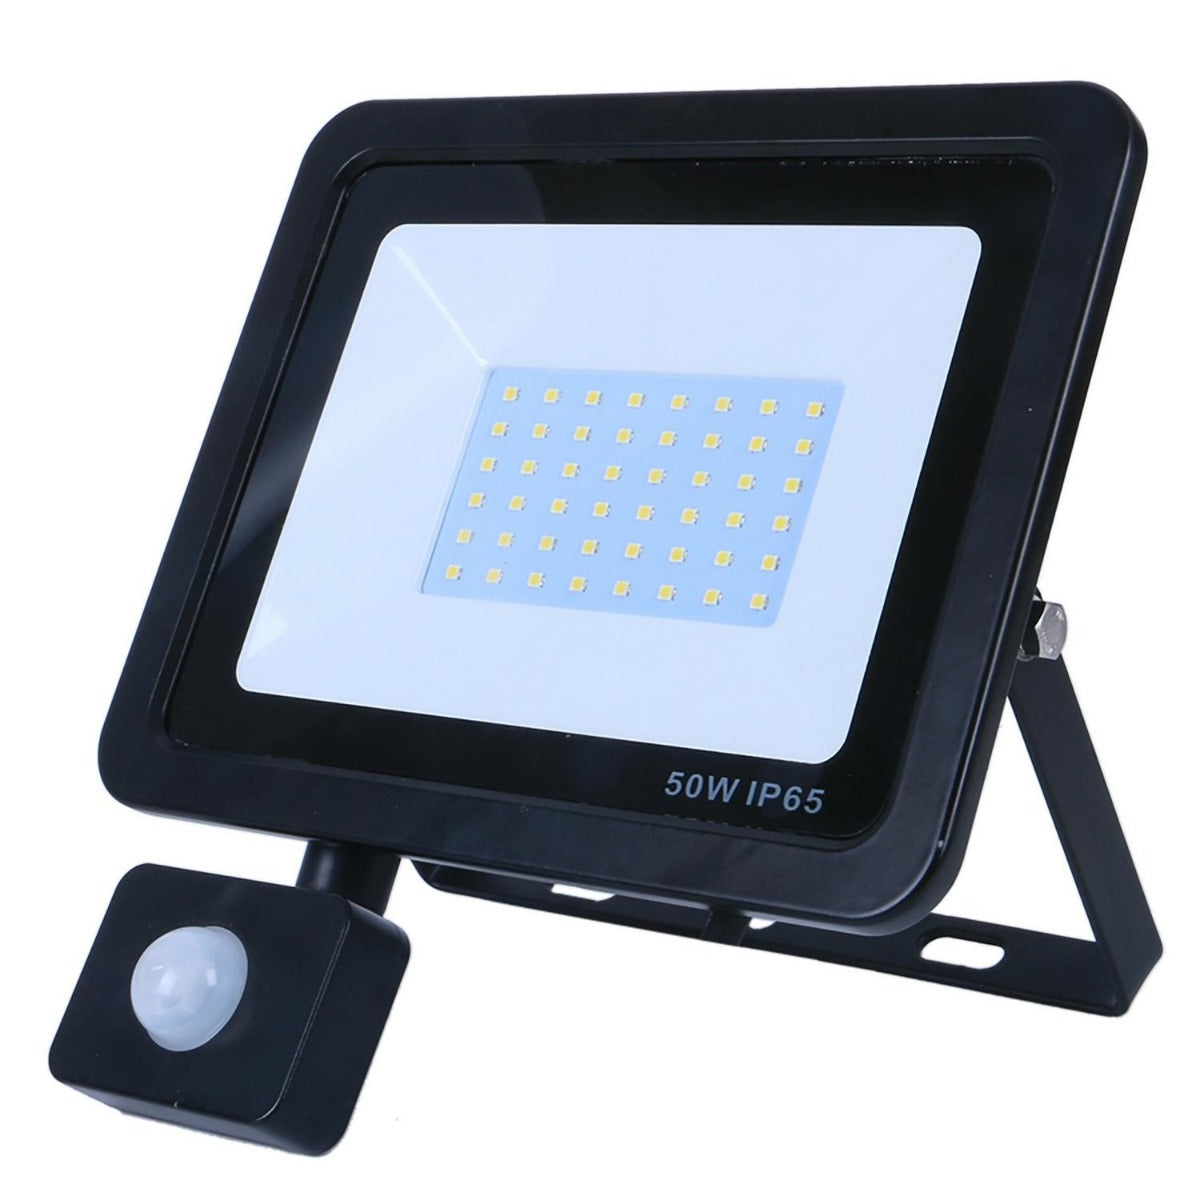 View 50w LED Floodlight With PIR Sensor information